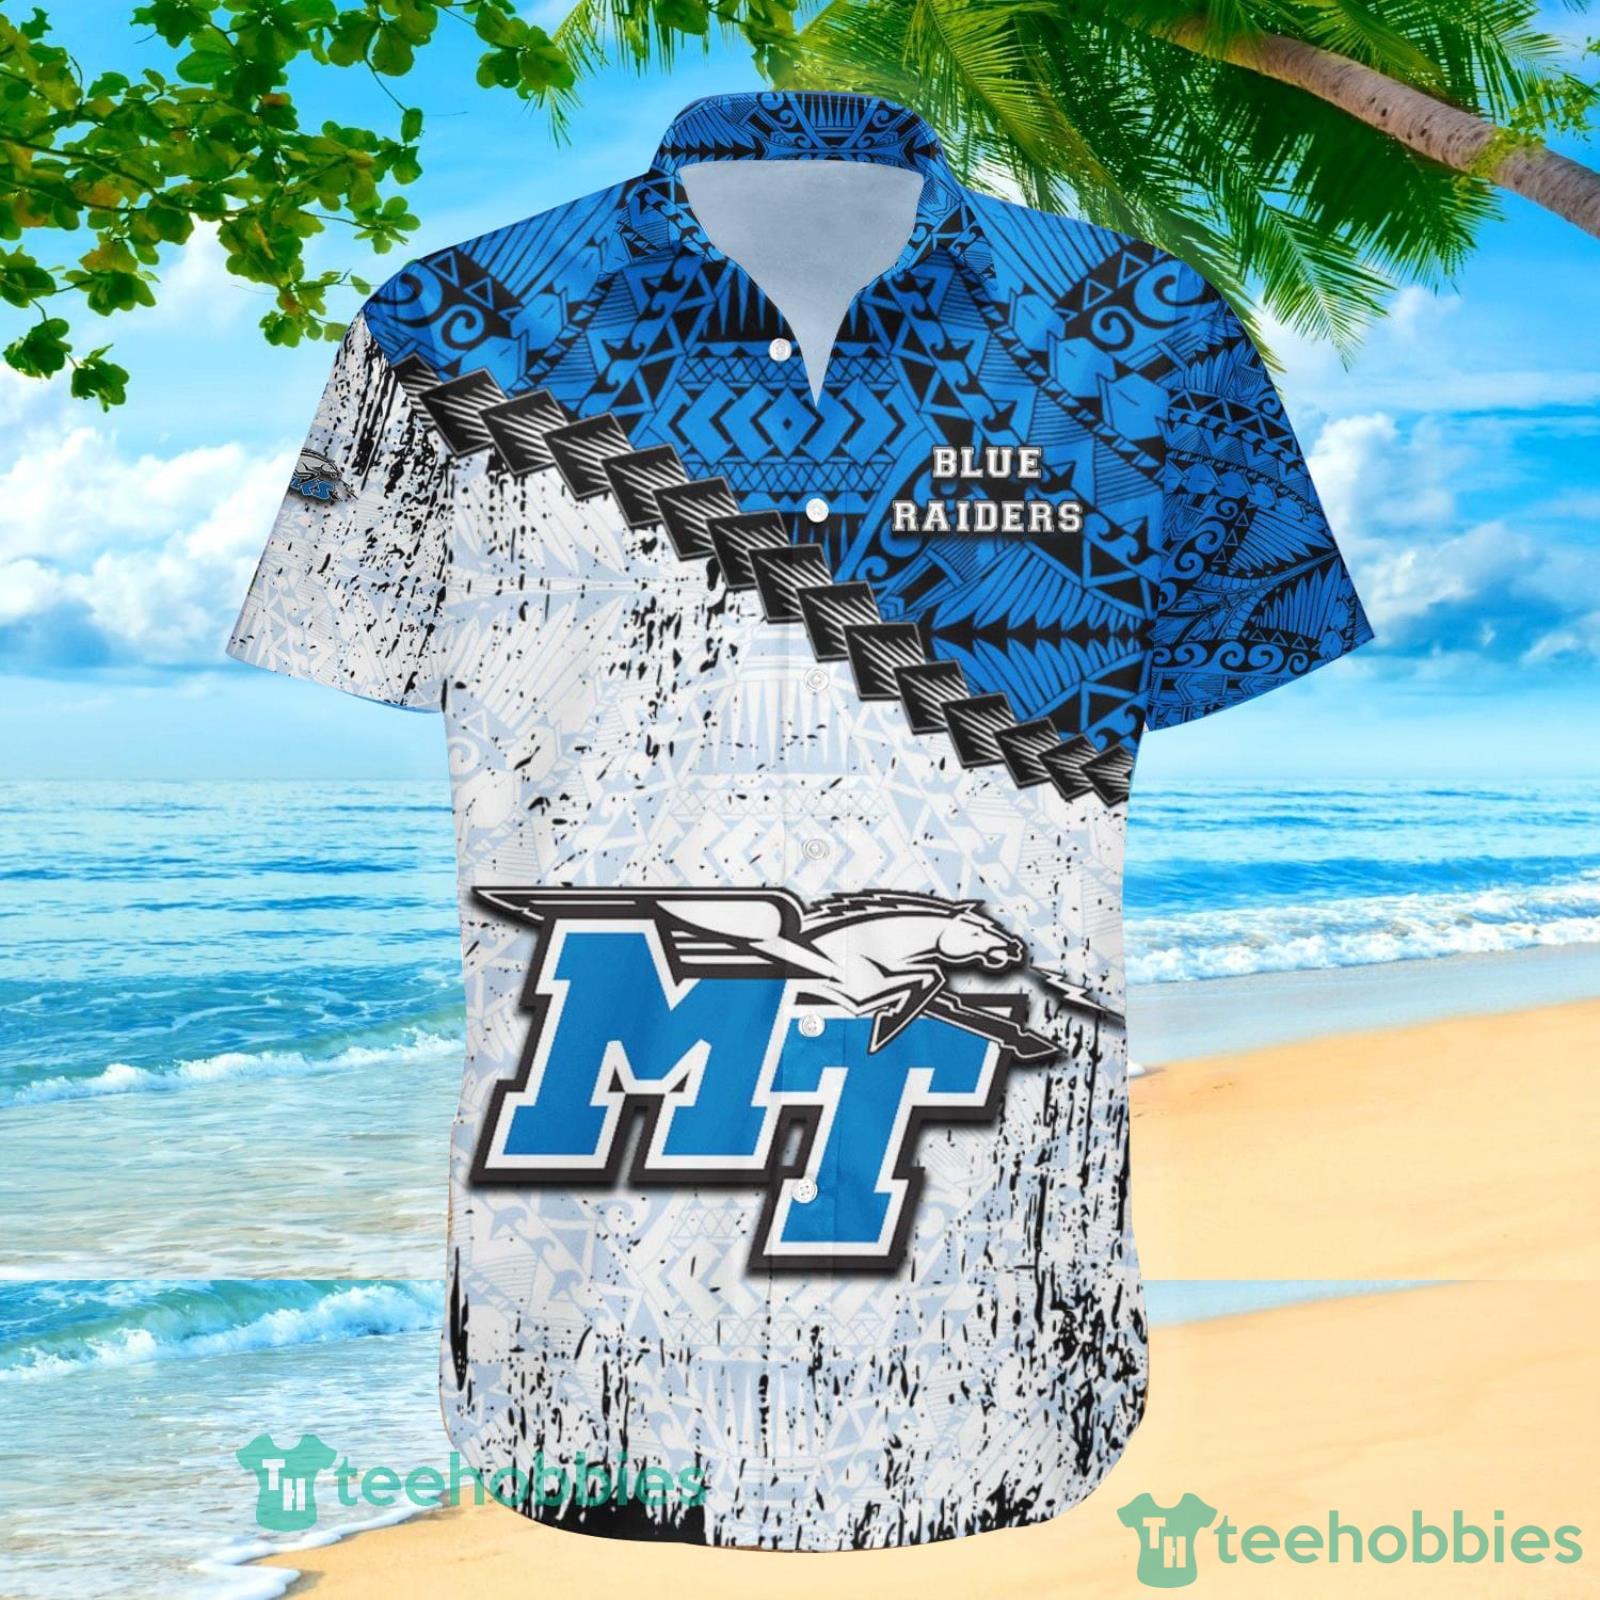 Bluey Family Shirt Bluey Button Shirt Bluey Summer Shirt Bluey Shirt Bluey  Hawaiian Shirt Summer Gift For Men And Women - Freedomdesign